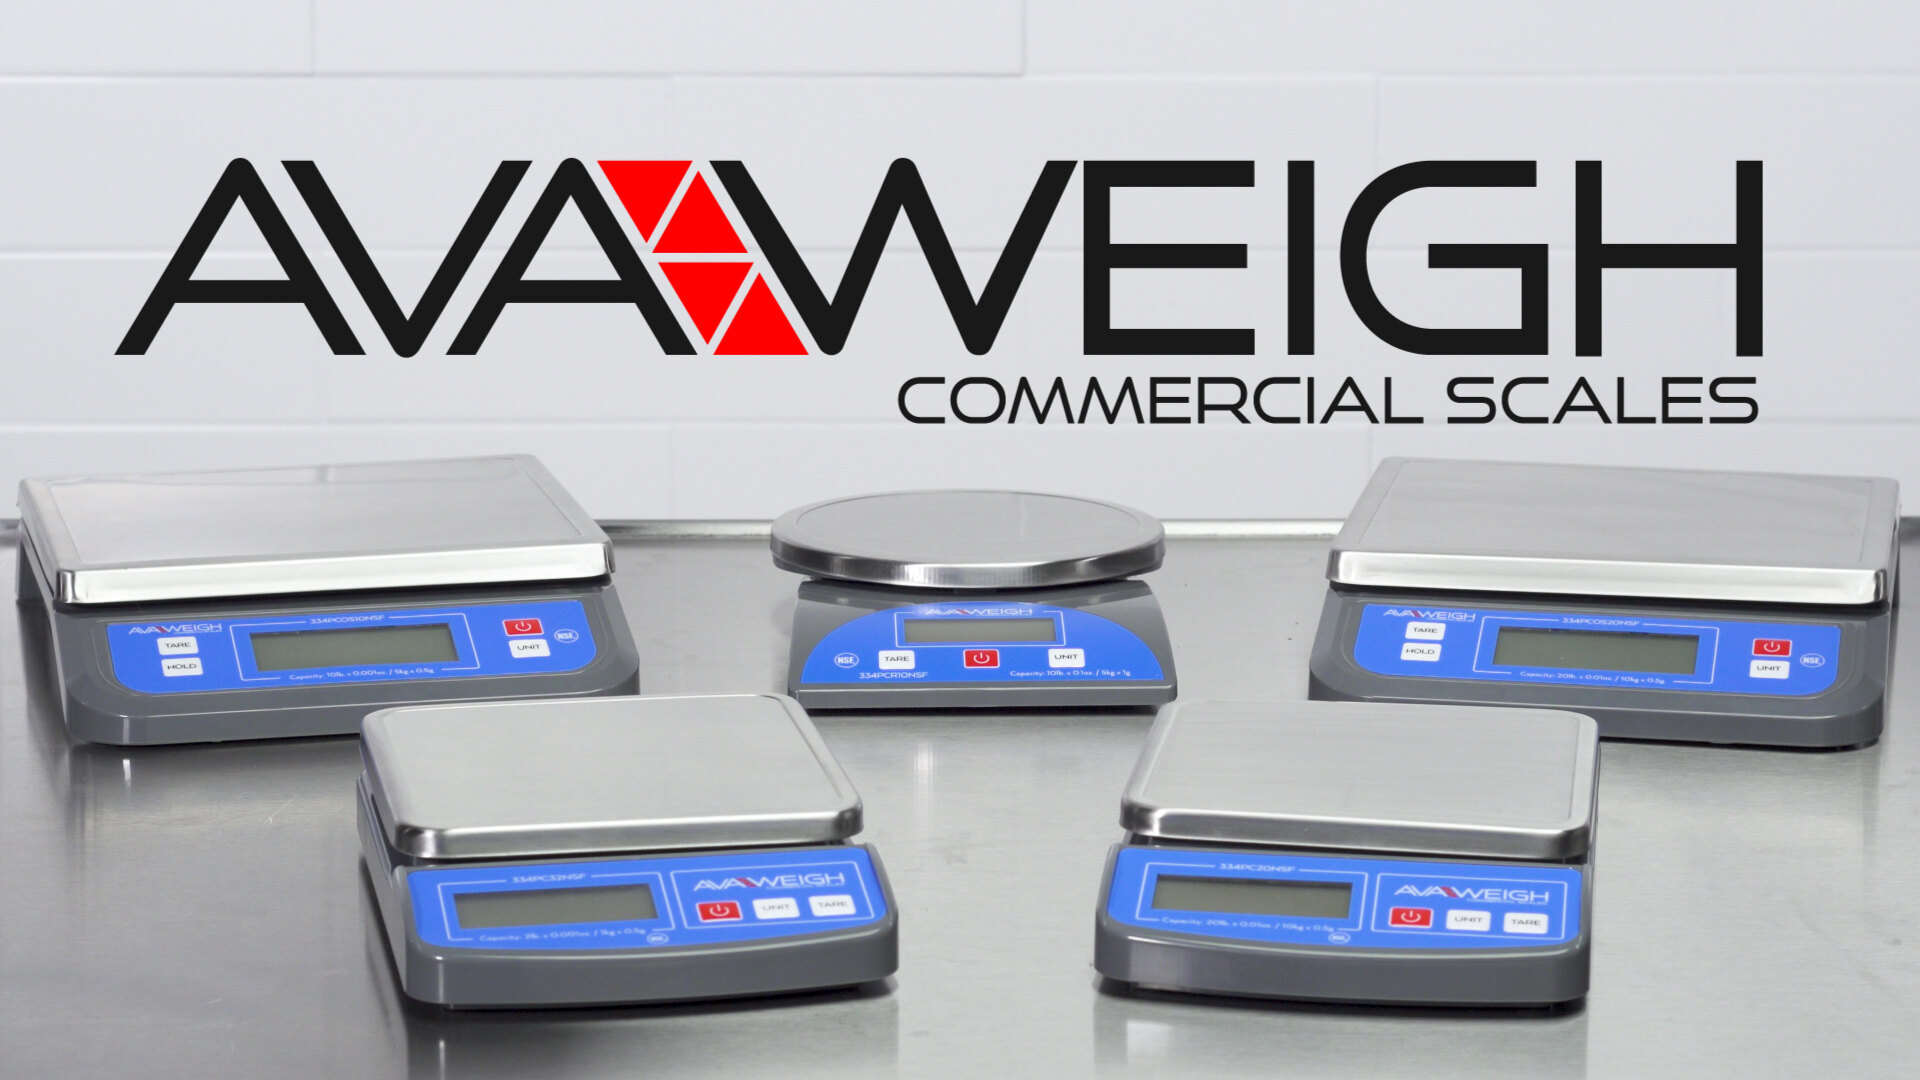 AvaWeigh PC32 2 lb. Digital Portion Control Scale